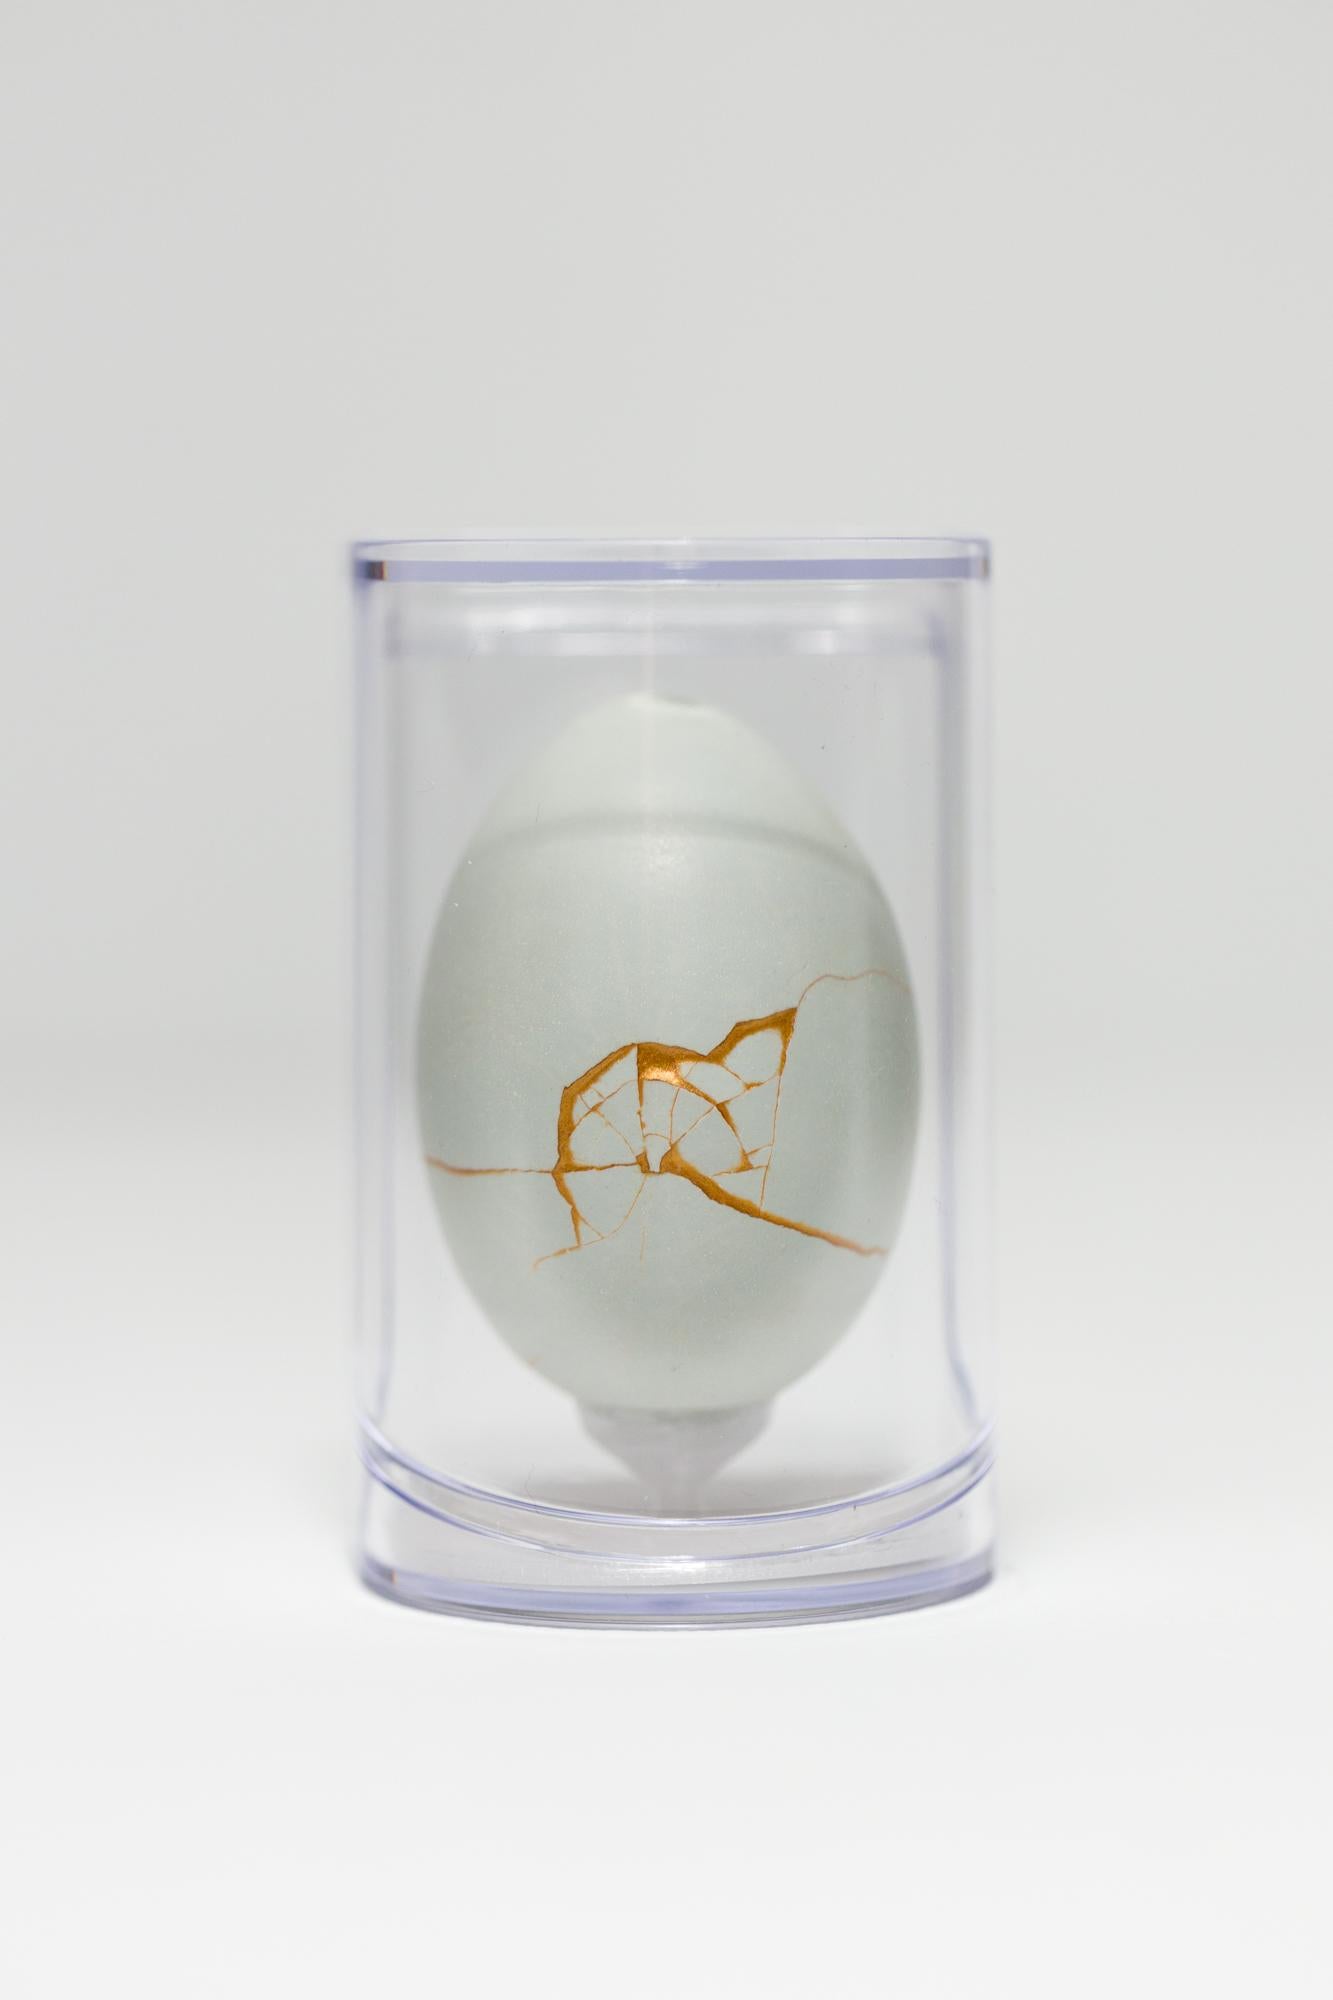 "Day in the Life: Double Yolk #1", Found Object Sculpture, Egg Motif - Mixed Media Art by Katie VanVliet